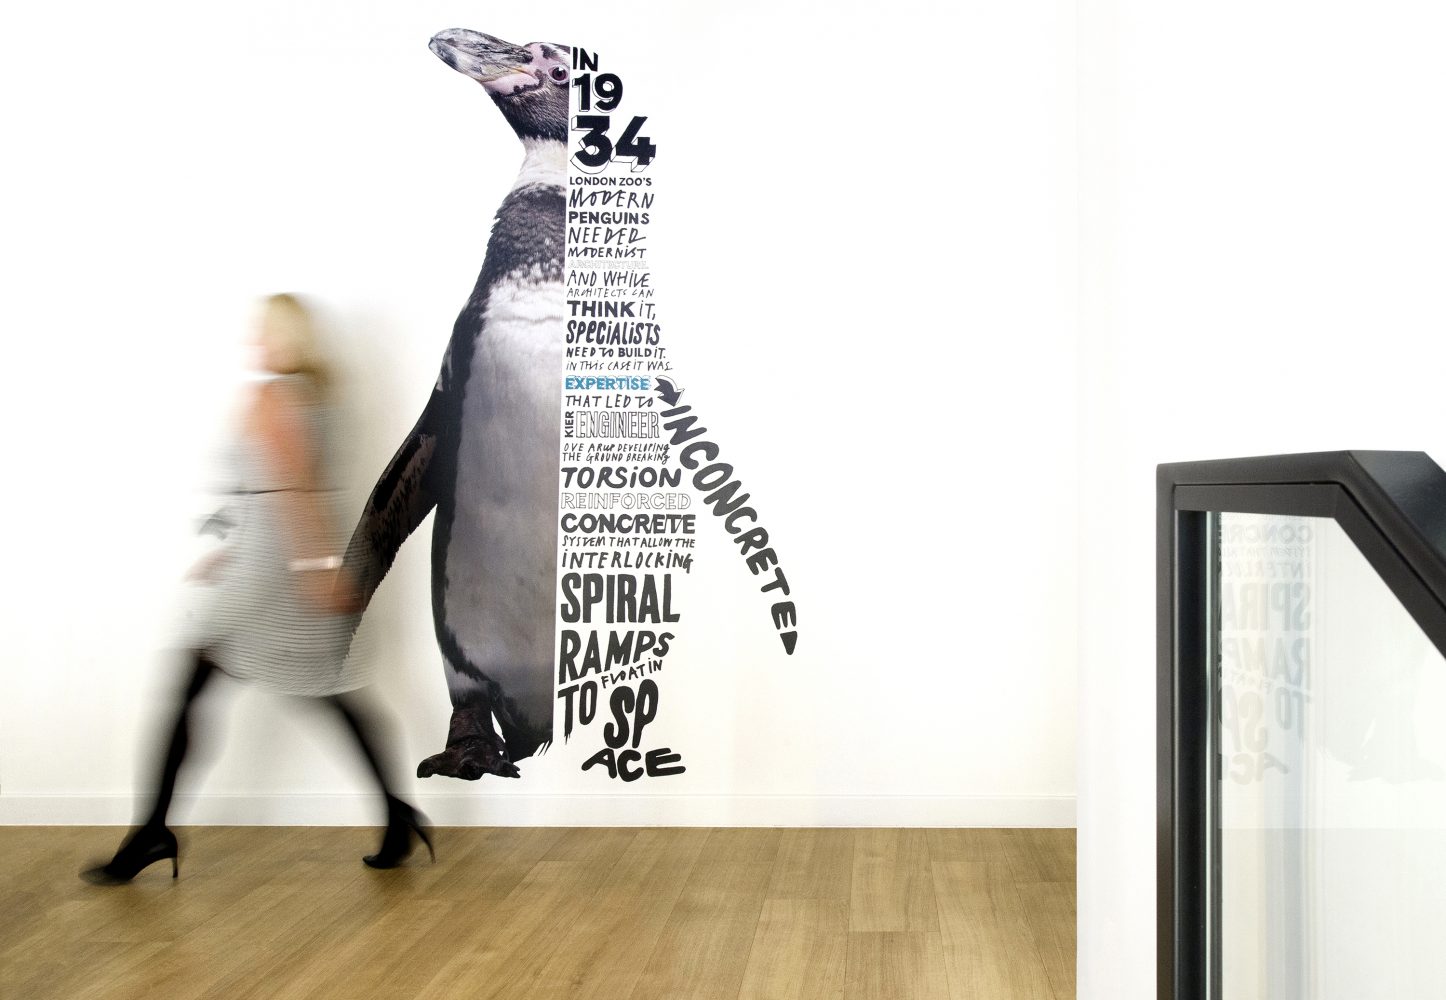 Penguin illustration for Kier HQ, creative identity and brand storytelling, by Household.